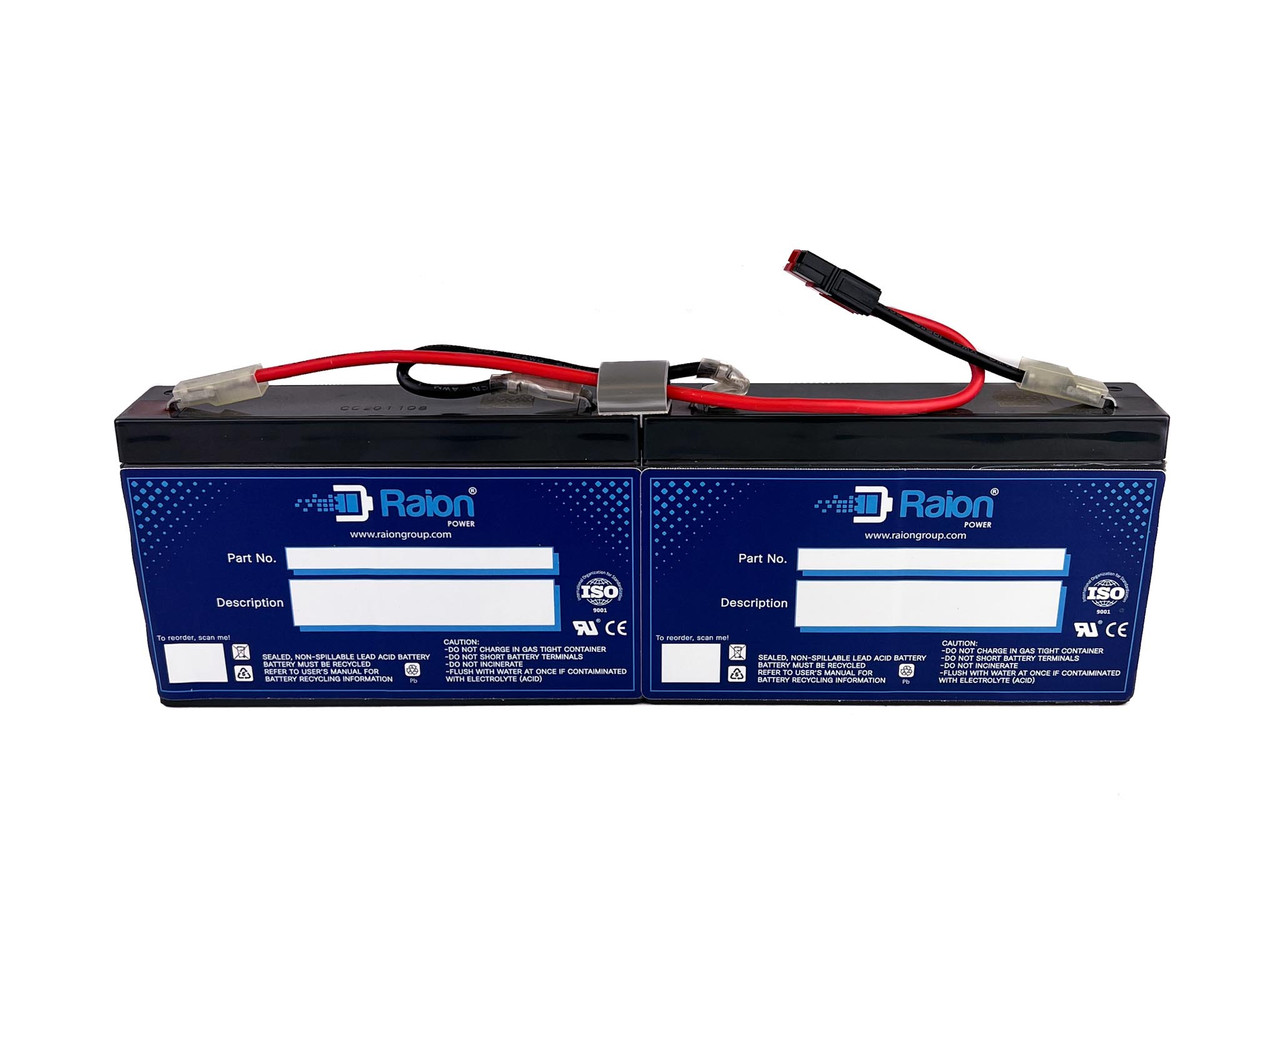 Raion Power Lead Acid Replacement Battery Cartridge for APC SU5005